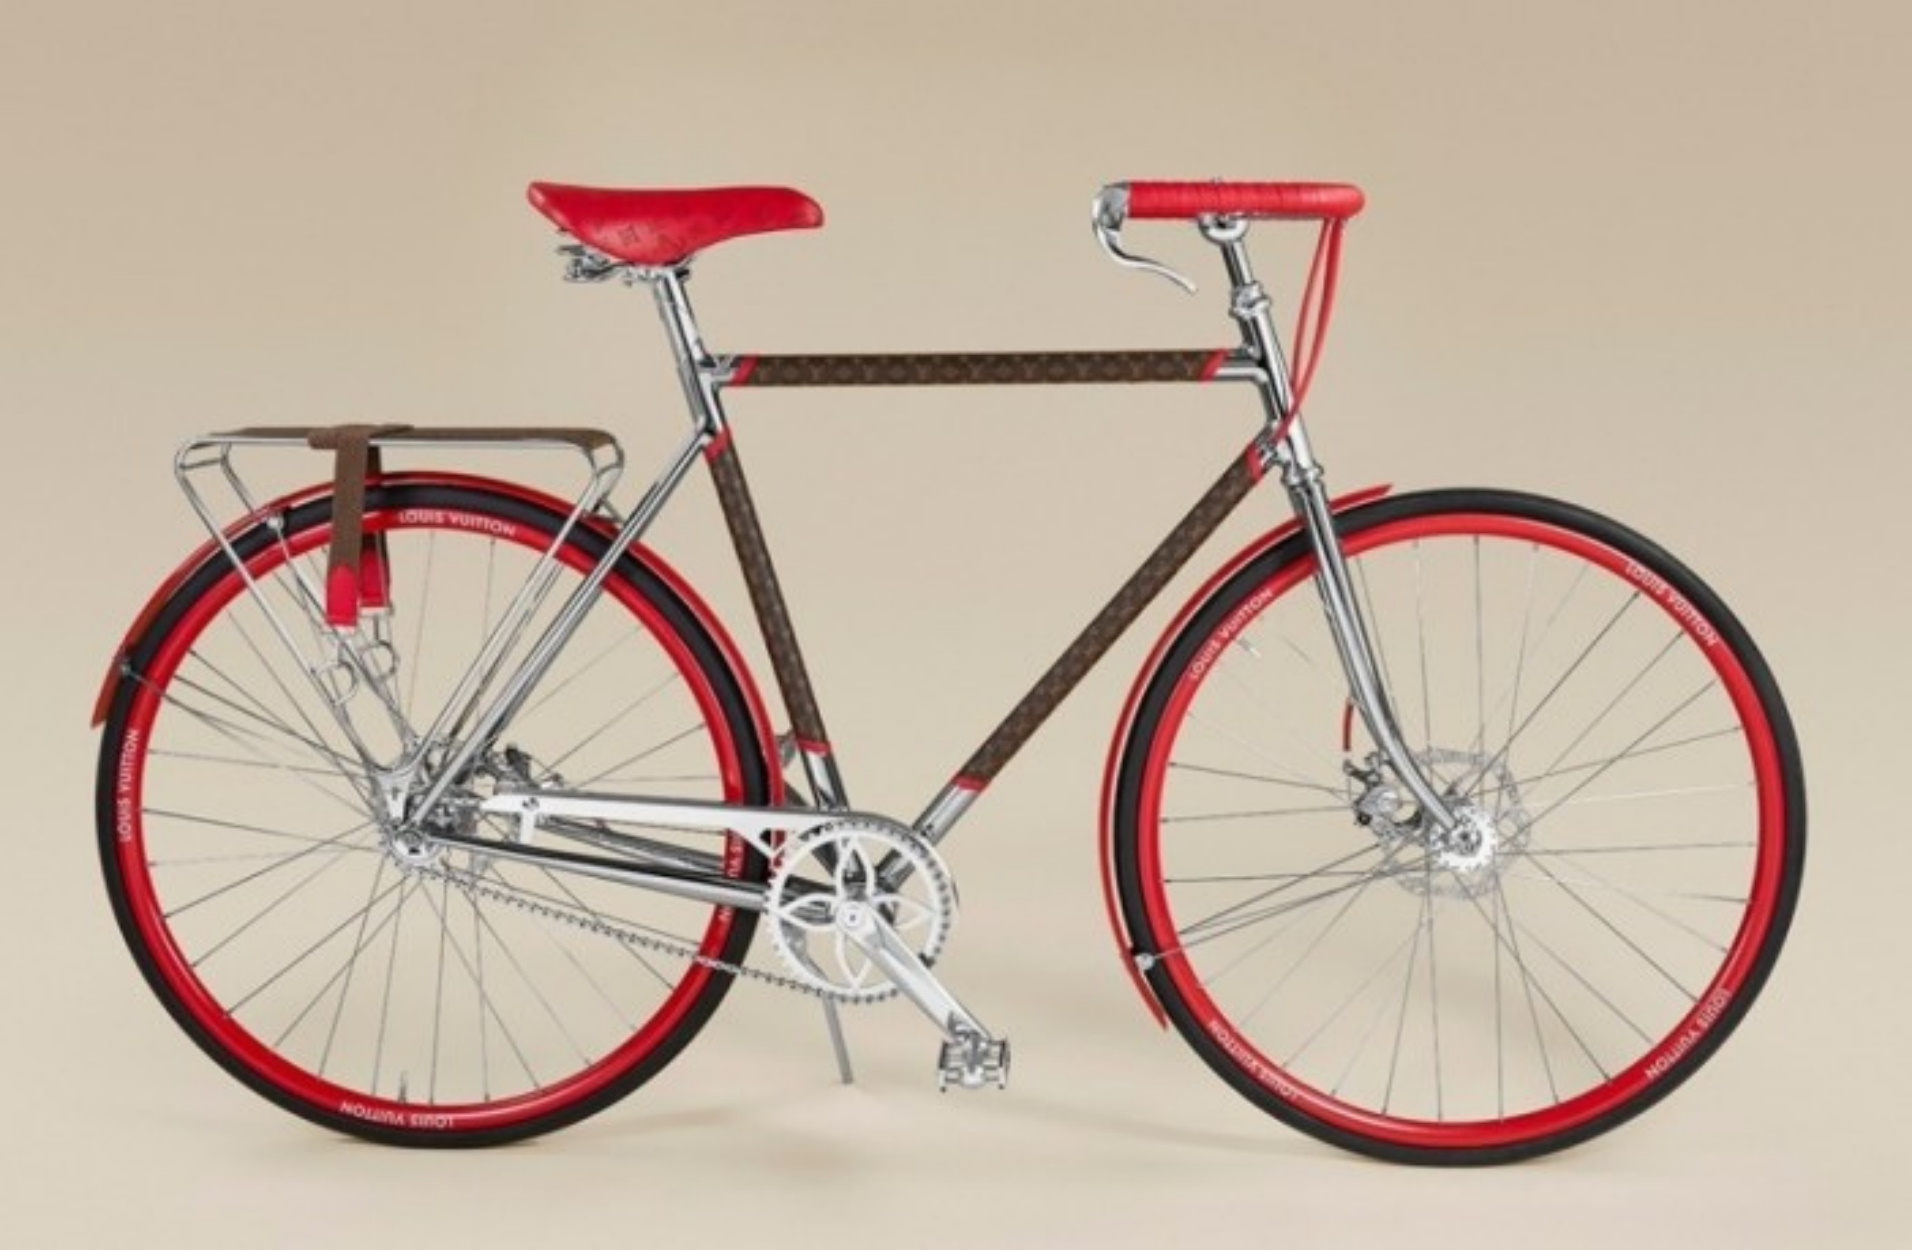 LV Bike: Δείτε το νέο πολυτελές ποδήλατο που κυκλοφόρησε ο οίκος Louis Vuitton